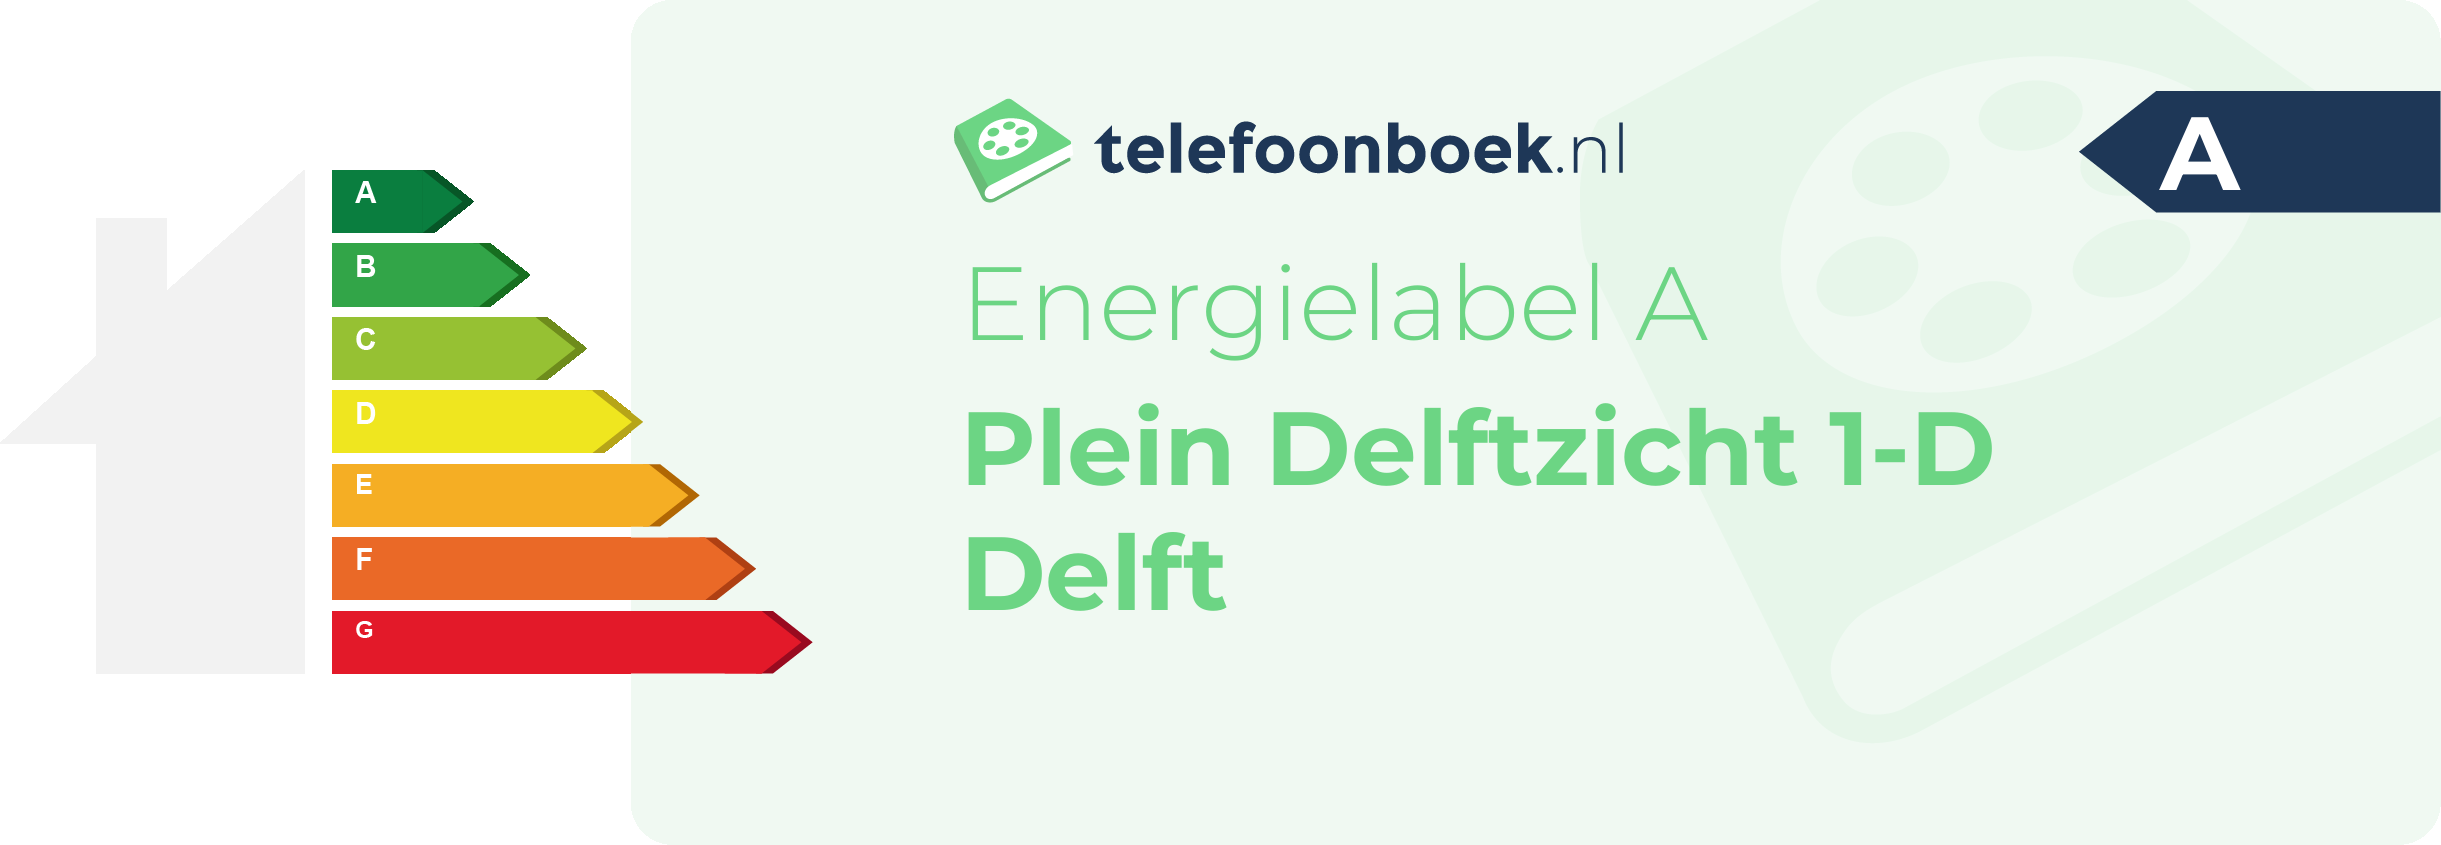 Energielabel Plein Delftzicht 1-D Delft